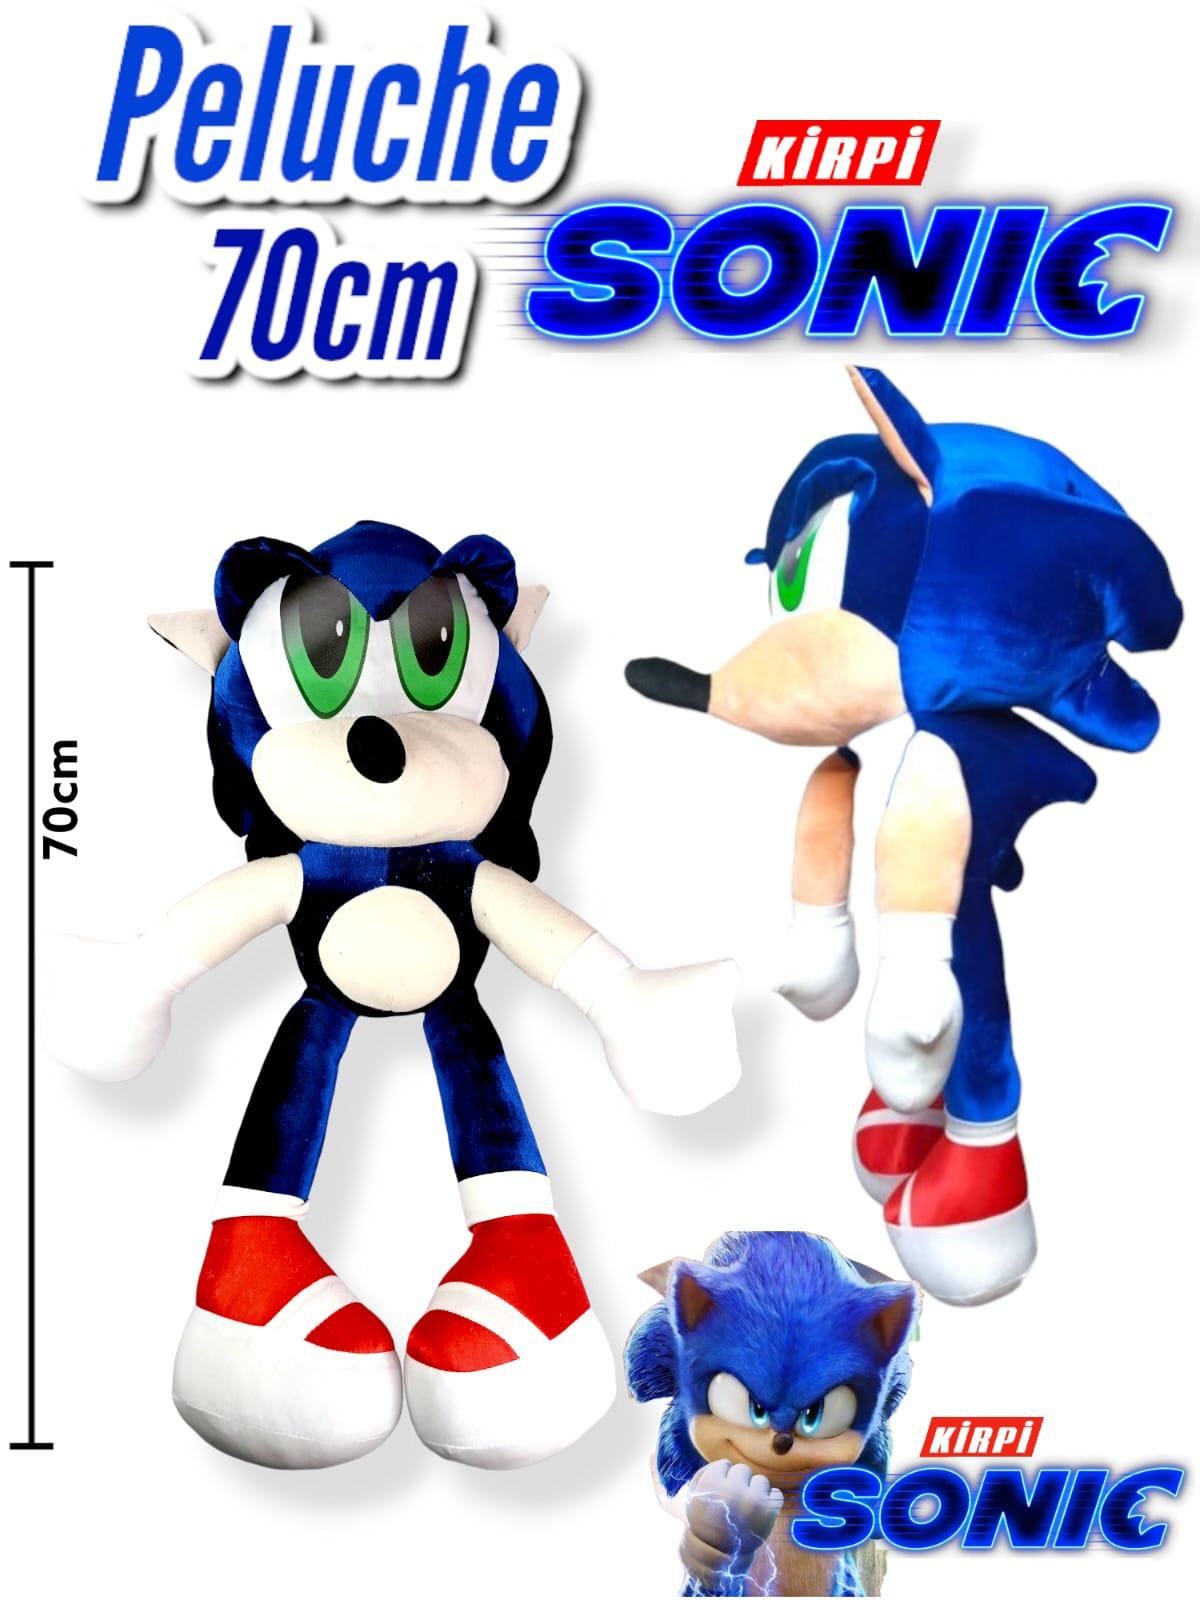 Peluche Sonic Grande 70cm